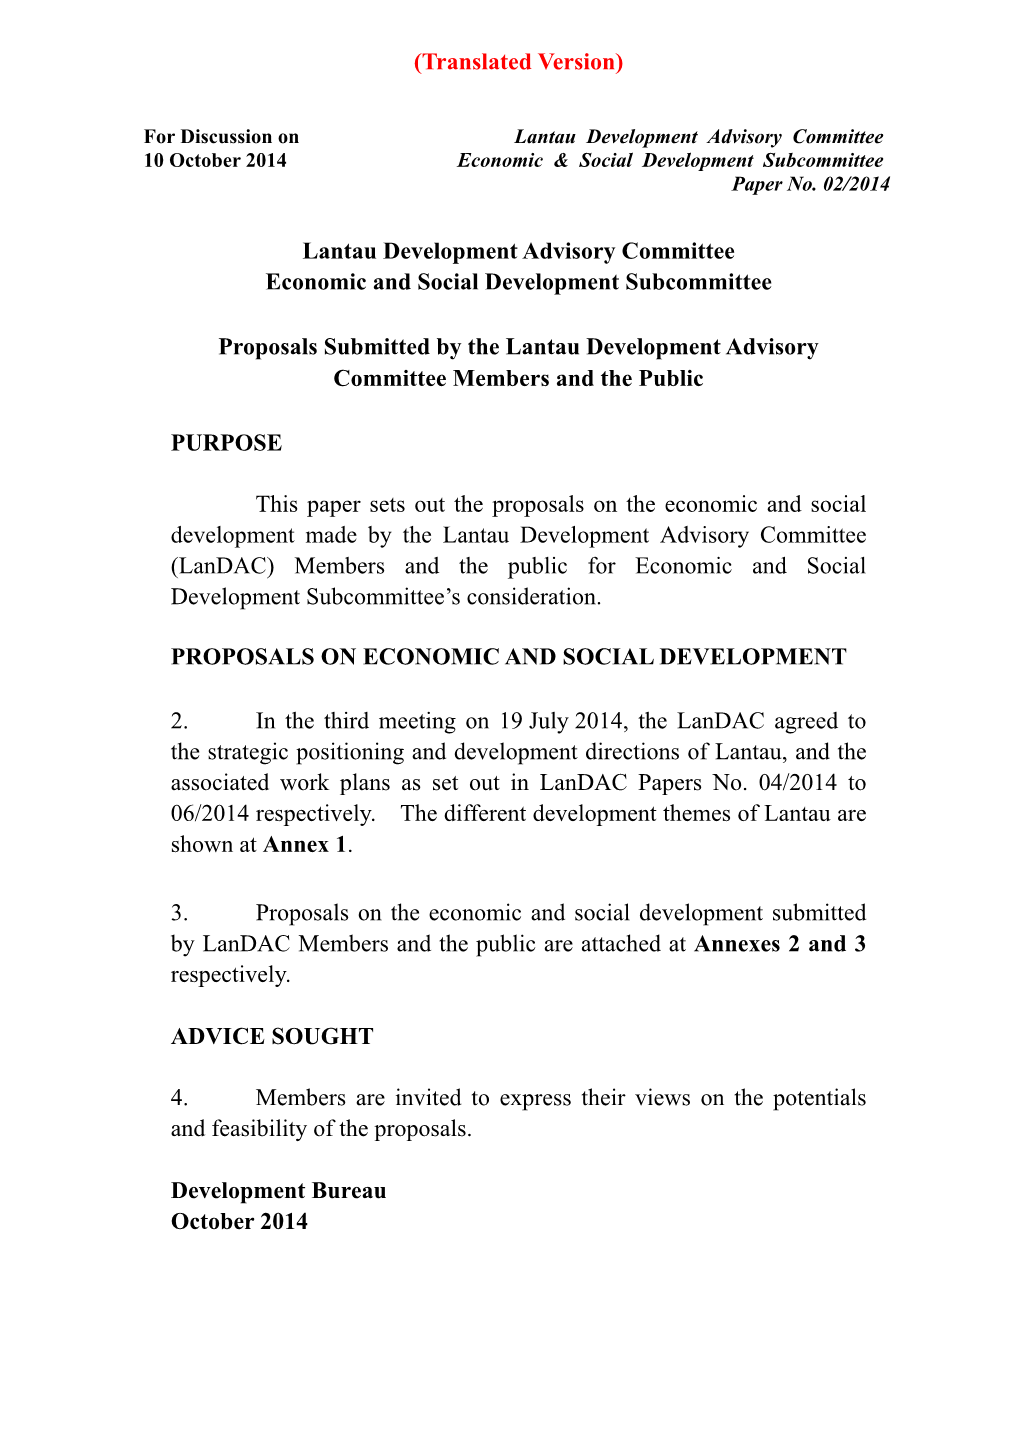 Lantau Development Advisory Committee Economic and Social Development Subcommittee